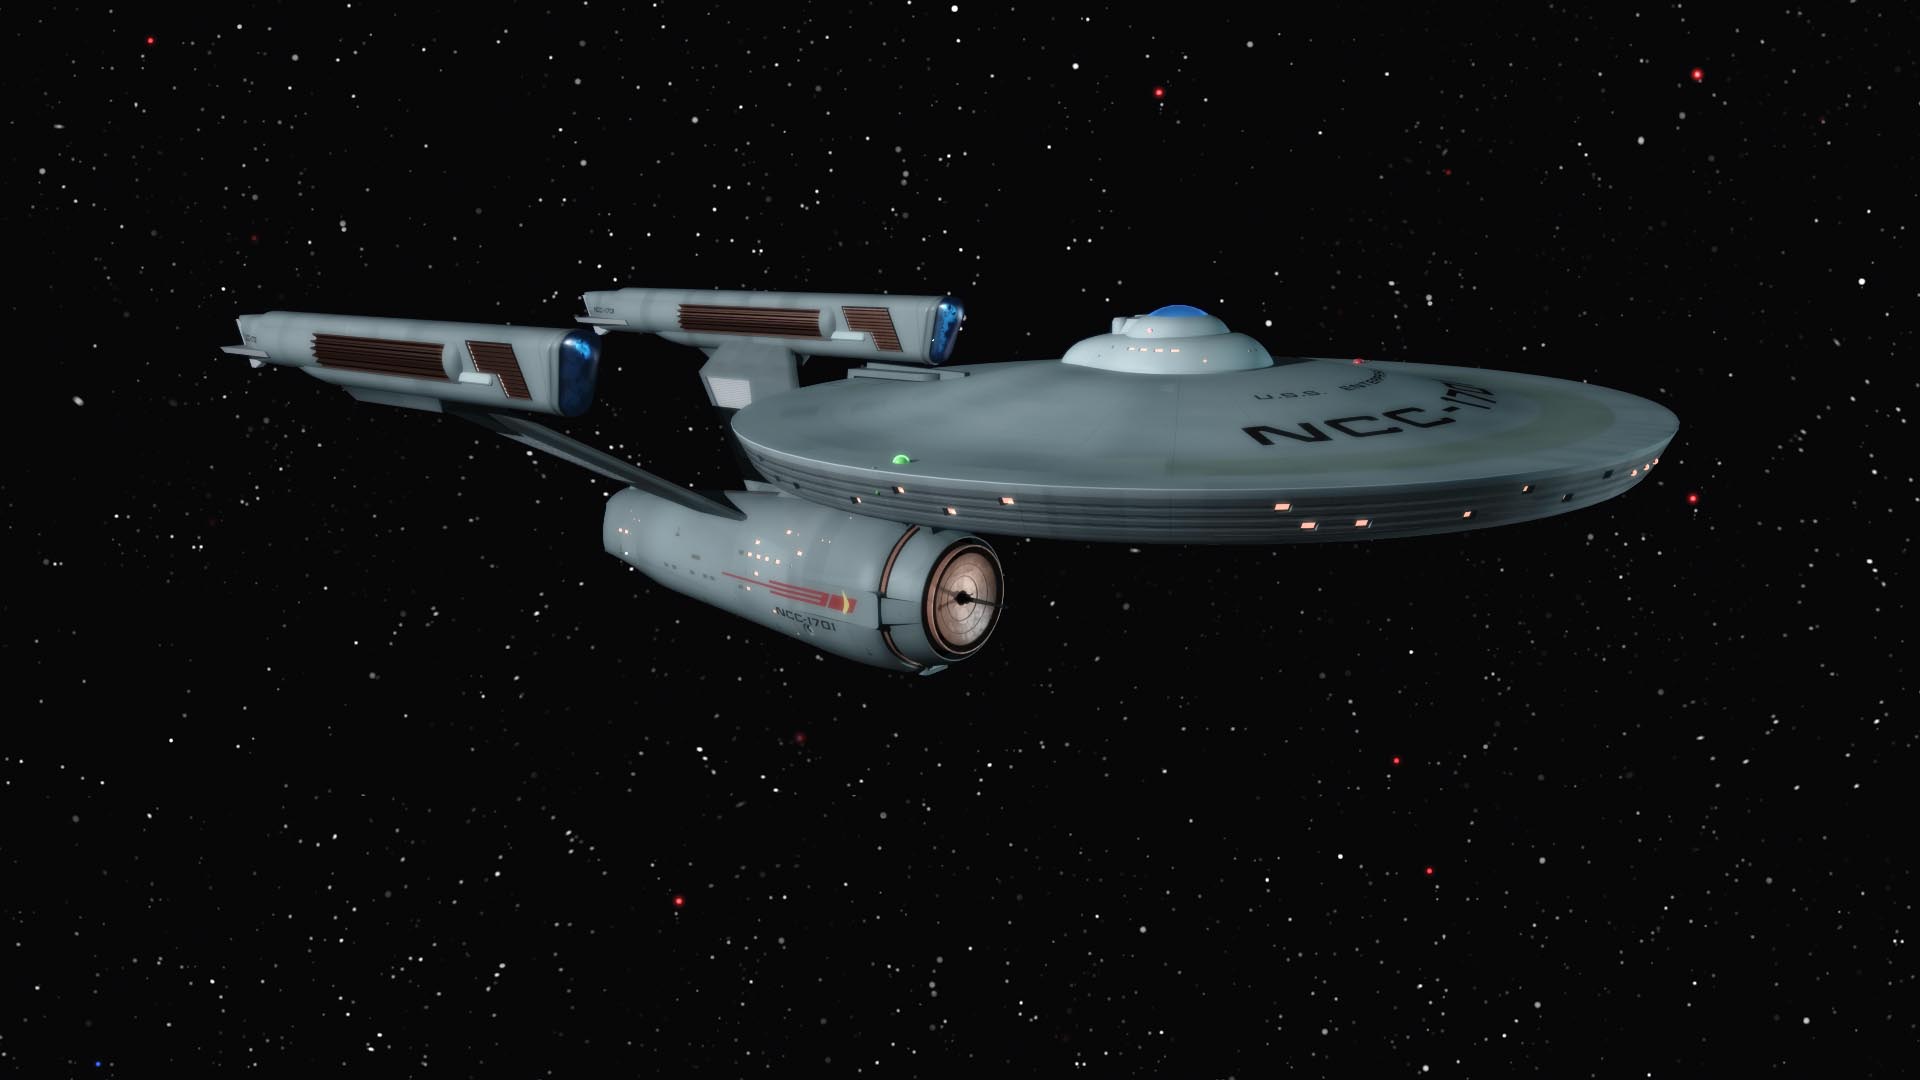 Starship Enterprise Star Trek Wallpaper 1920x1080 px Free Download